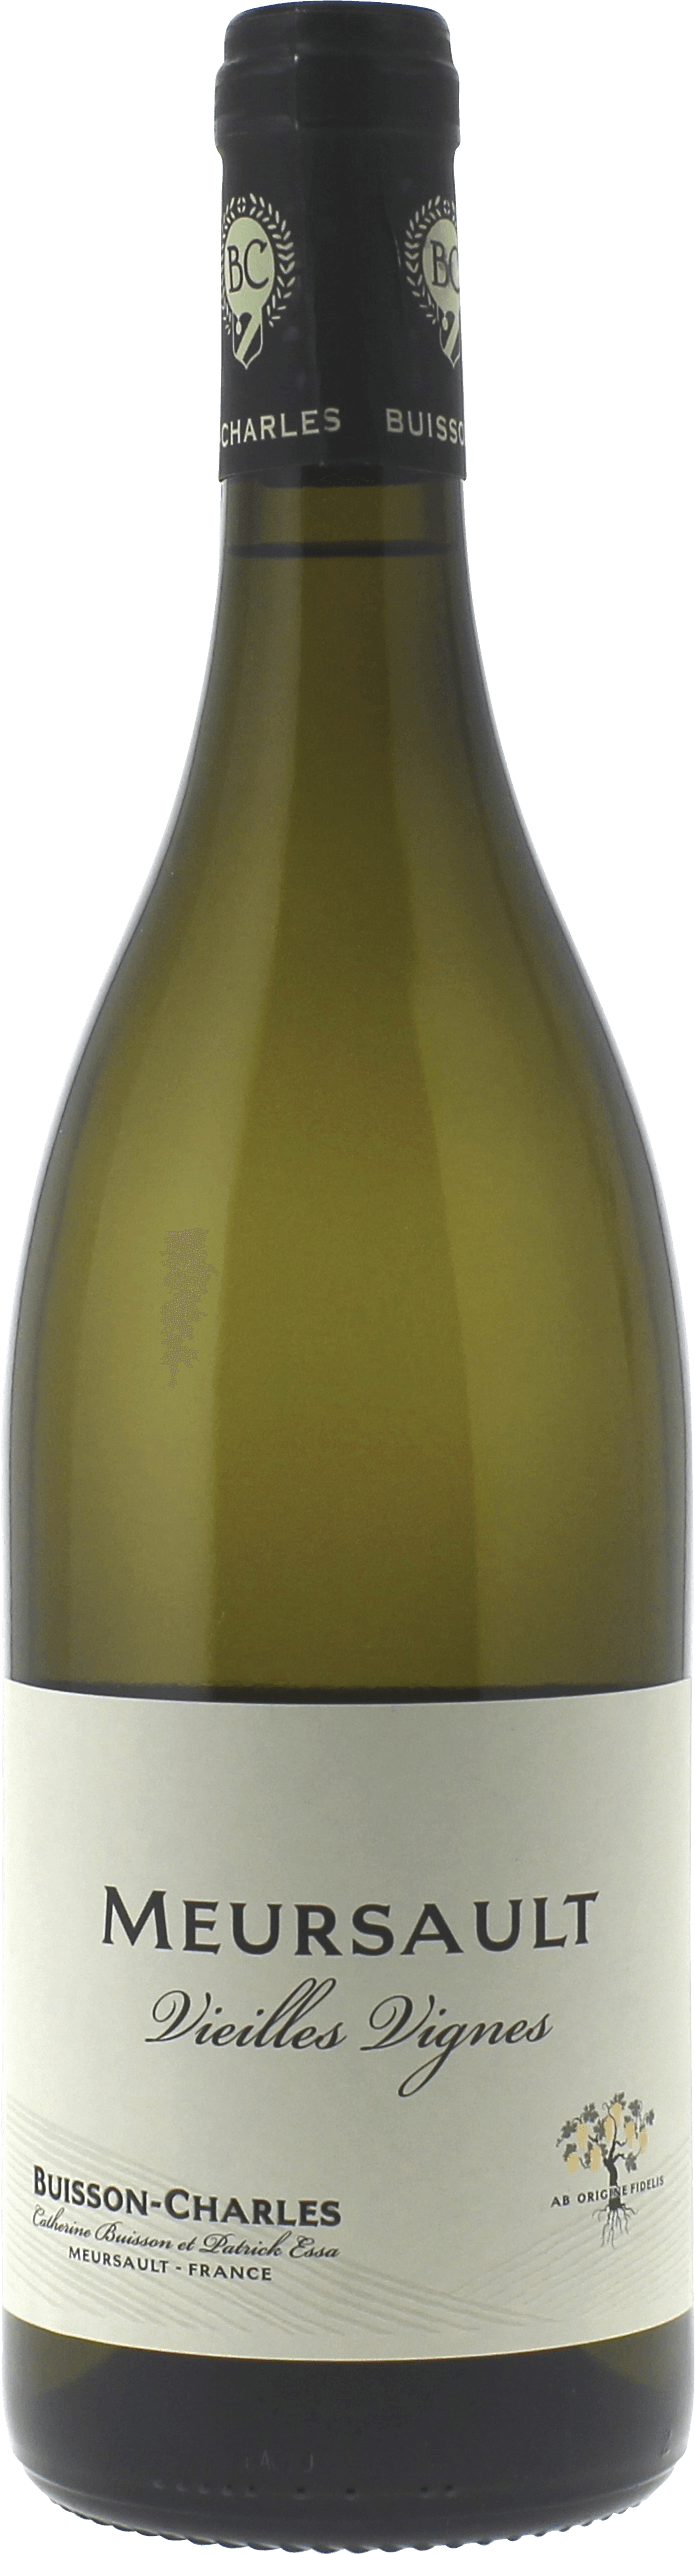 Meursault vieilles vignes 2018  BUISSON Charles, Bourgogne blanc